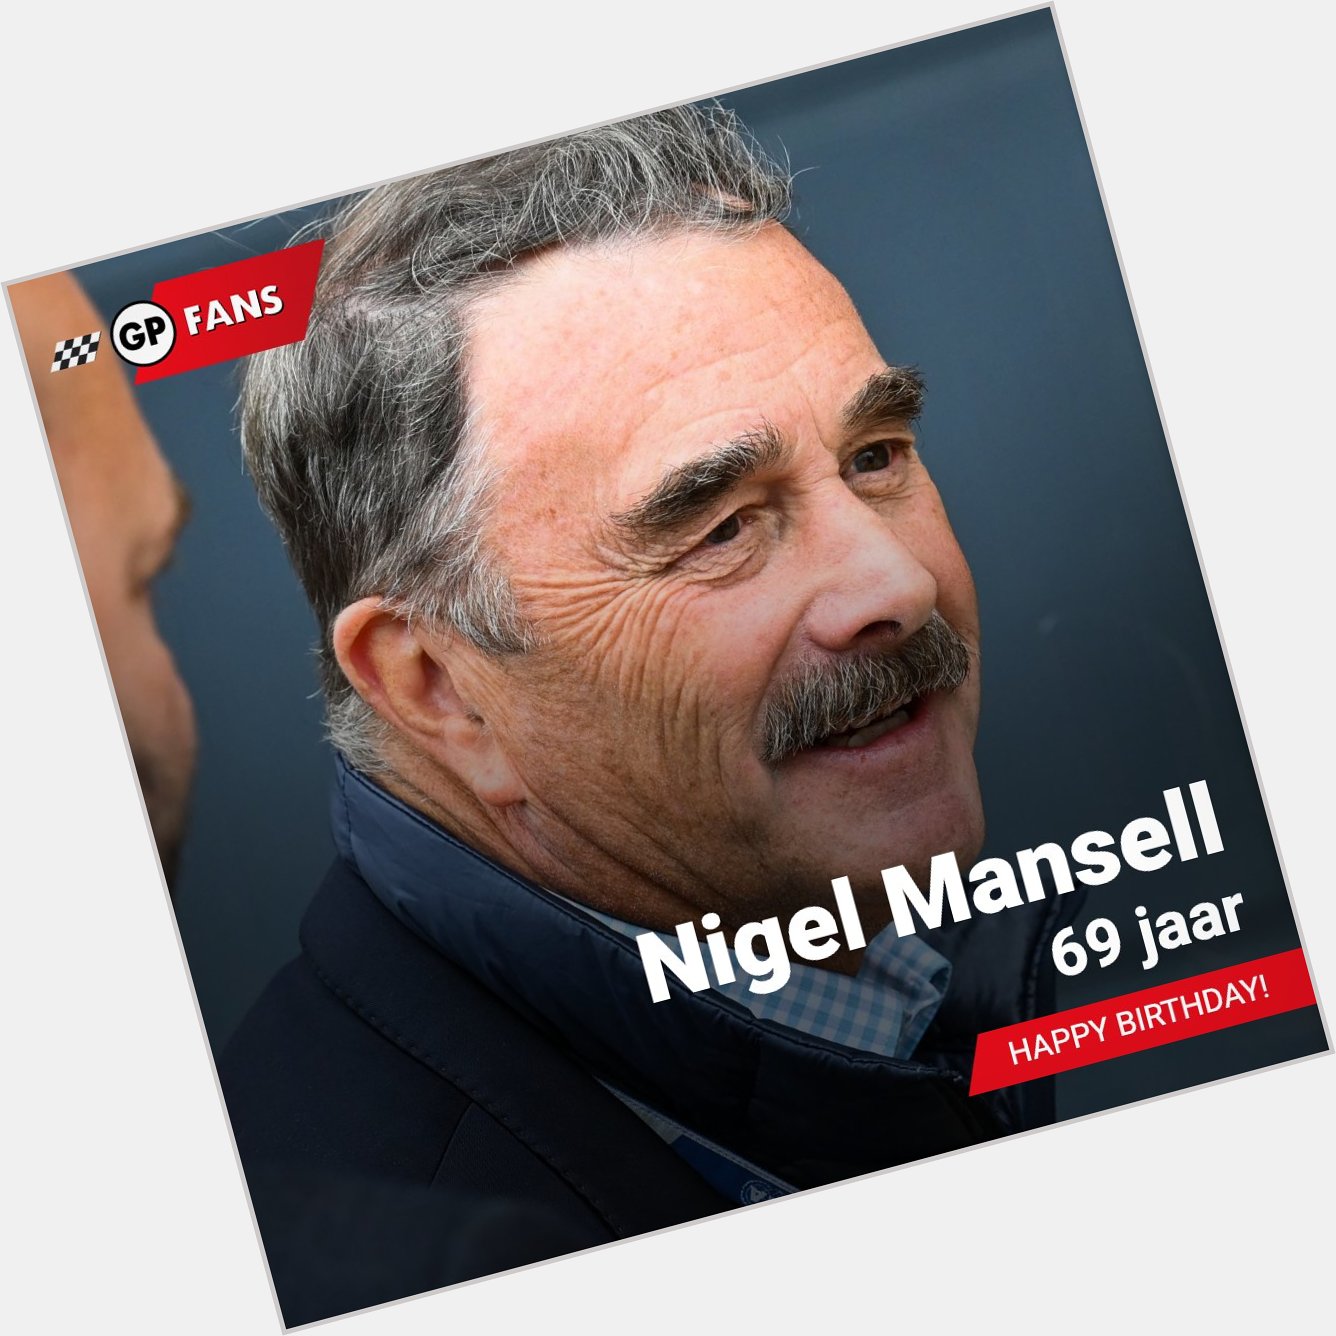 Nigel Mansell viert vandaag zijn 69ste verjaardag. Happy birthday    